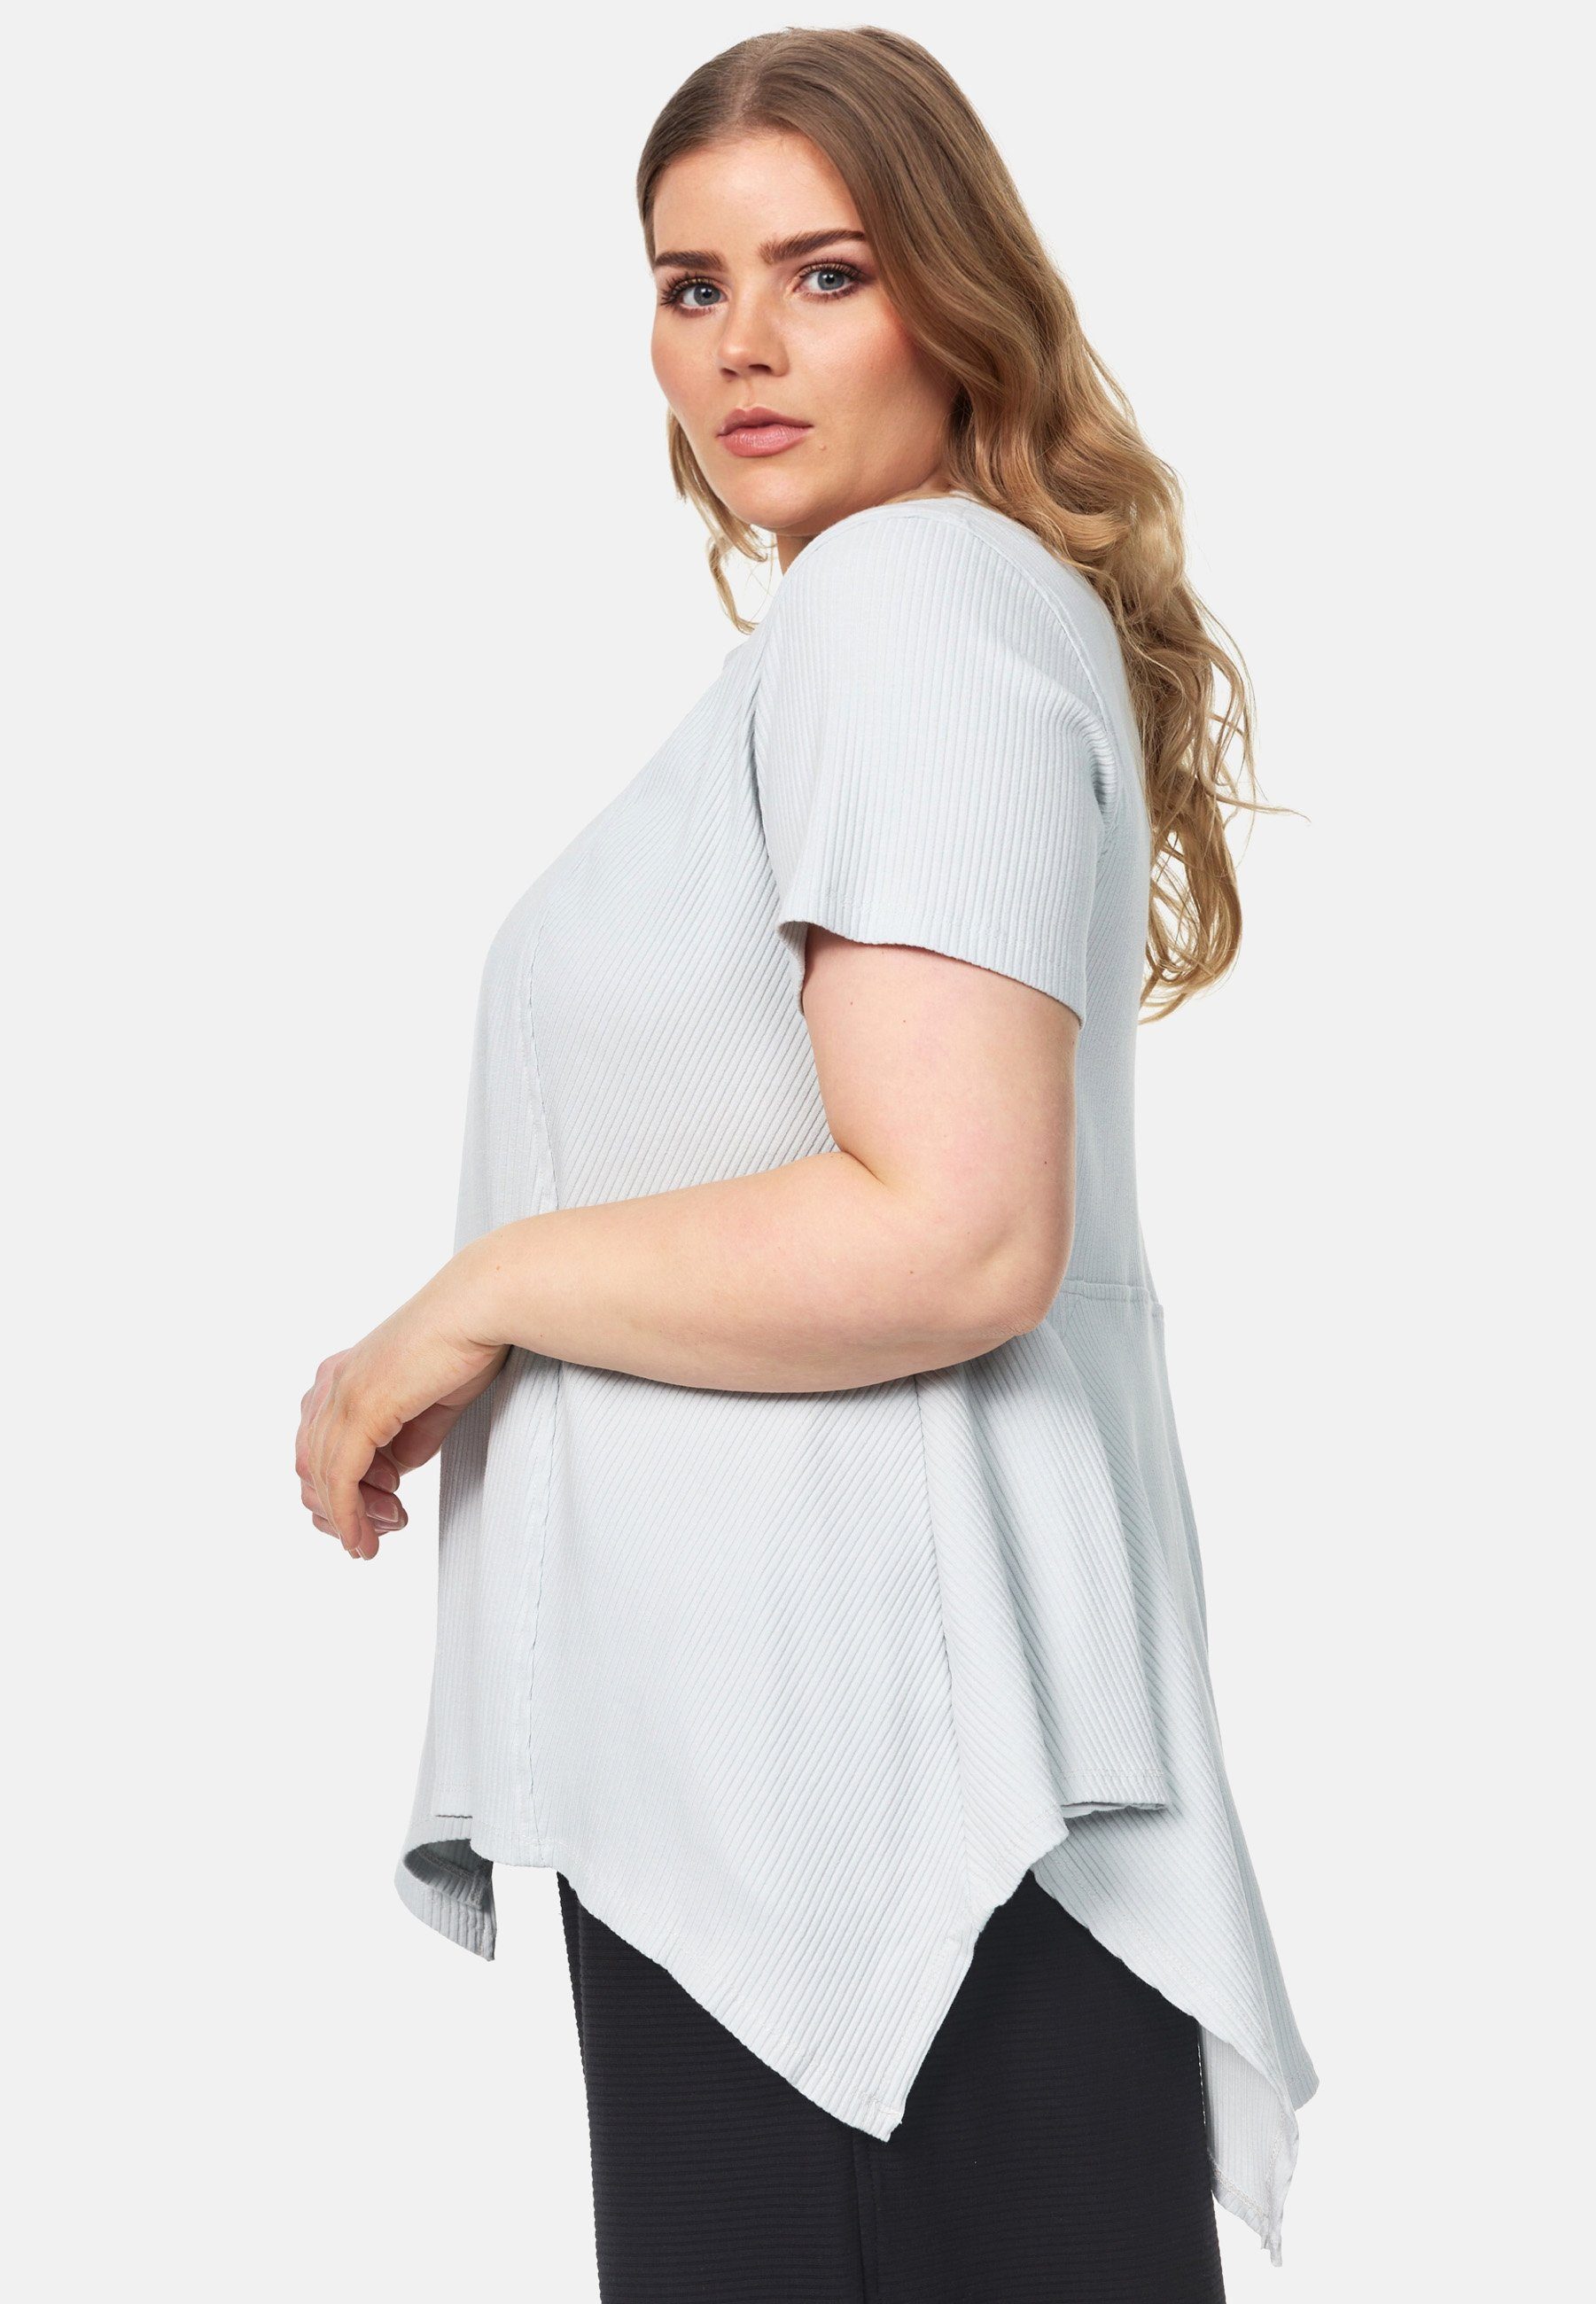 mit Tunikashirt 'Adele' Tunika Kekoo Shirt A-Linie asymmetrischem Grau Saum